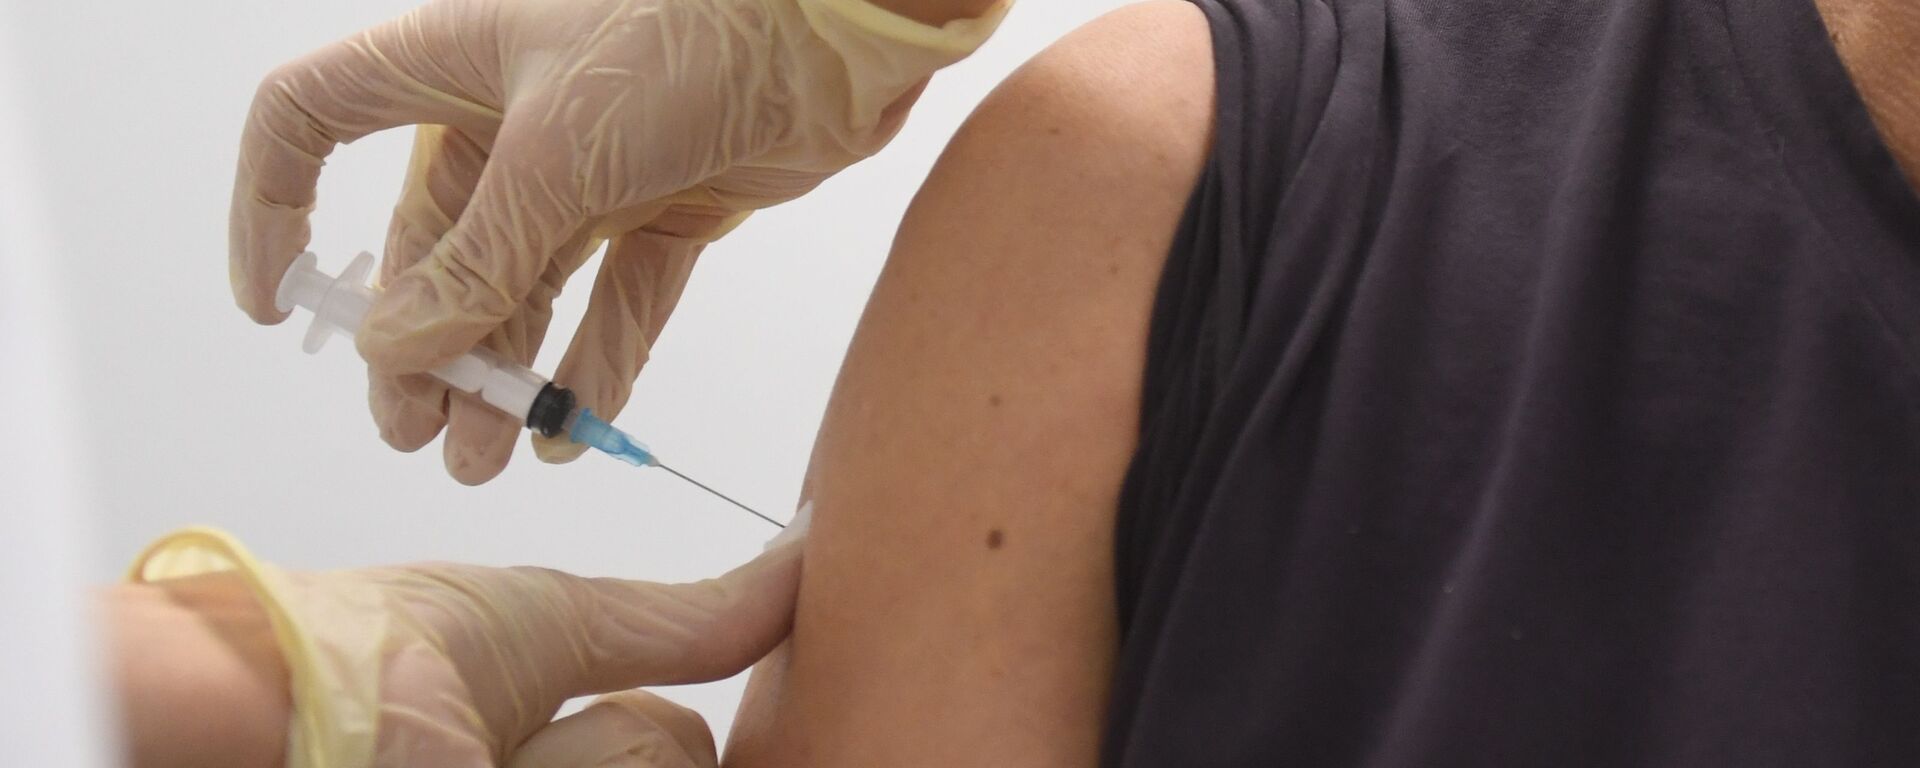 Мужчина вакцинируется против COVID-19 - Sputnik Ўзбекистон, 1920, 15.02.2021